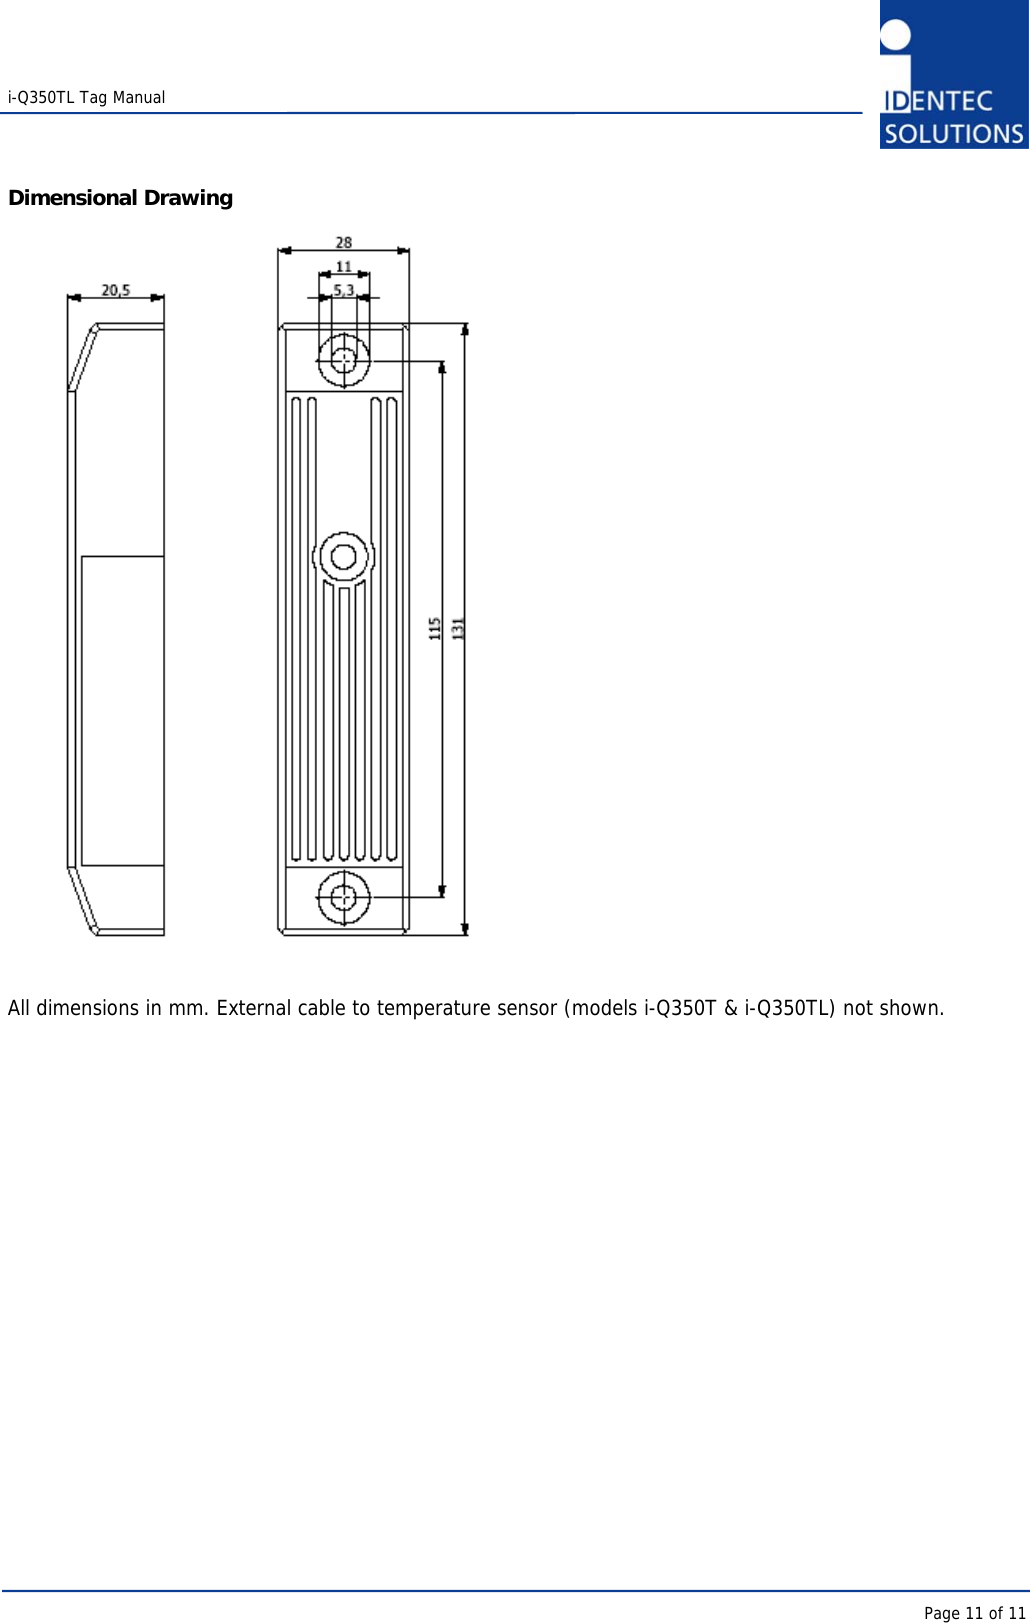   i-Q350TL Tag Manual      Page 11 of 11 Dimensional Drawing  All dimensions in mm. External cable to temperature sensor (models i-Q350T &amp; i-Q350TL) not shown. 